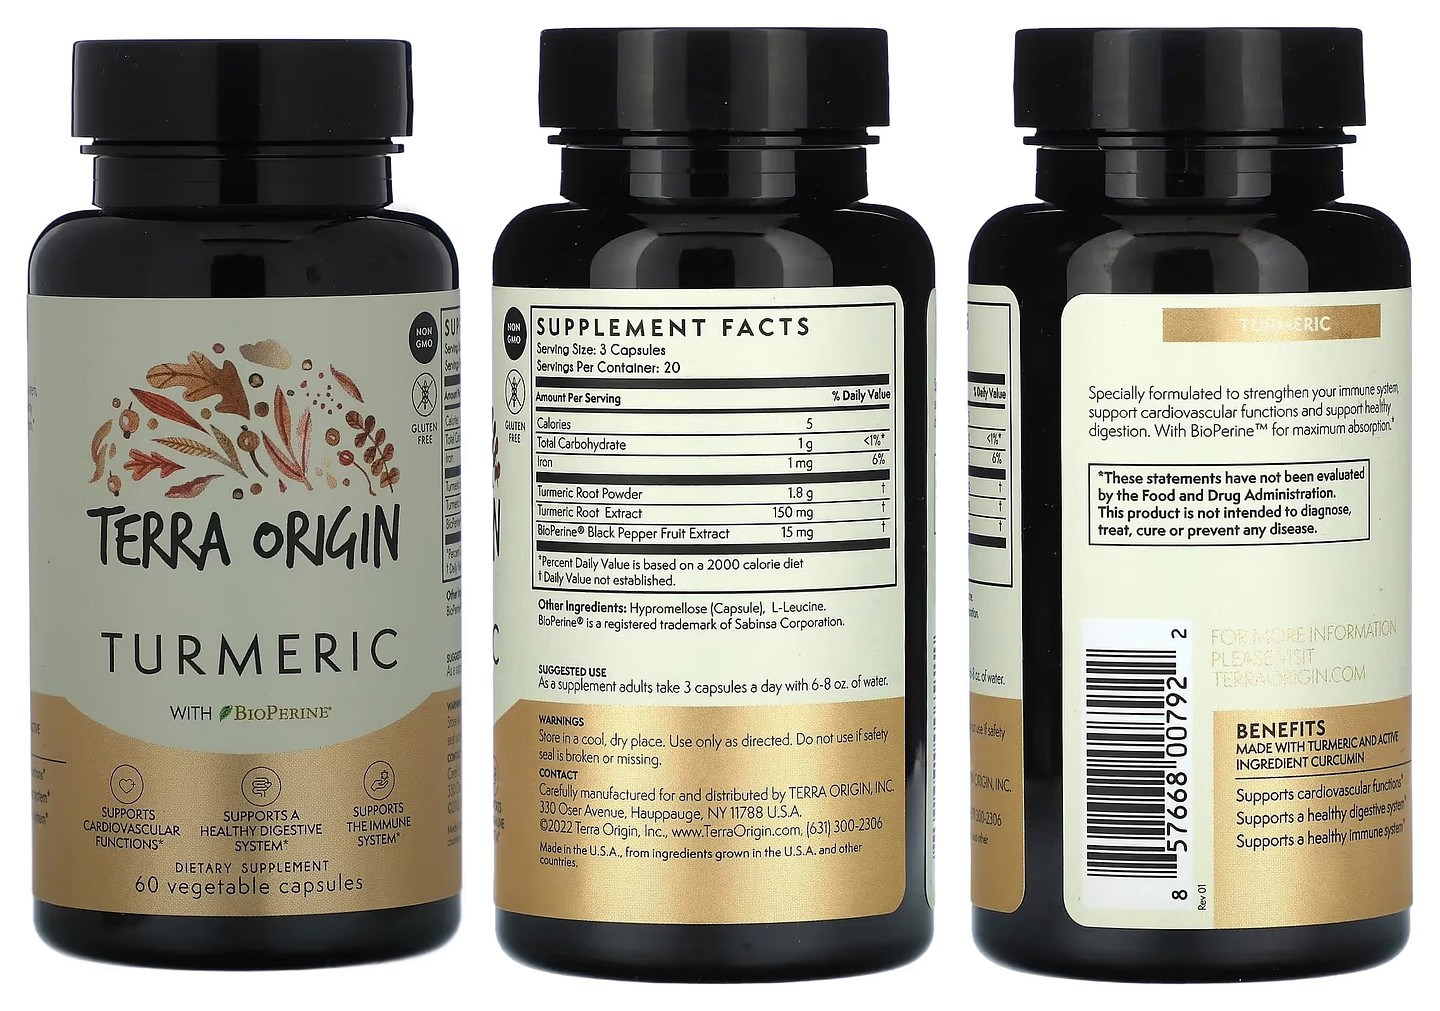 Terra Origin, Turmeric With BioPerine packaging